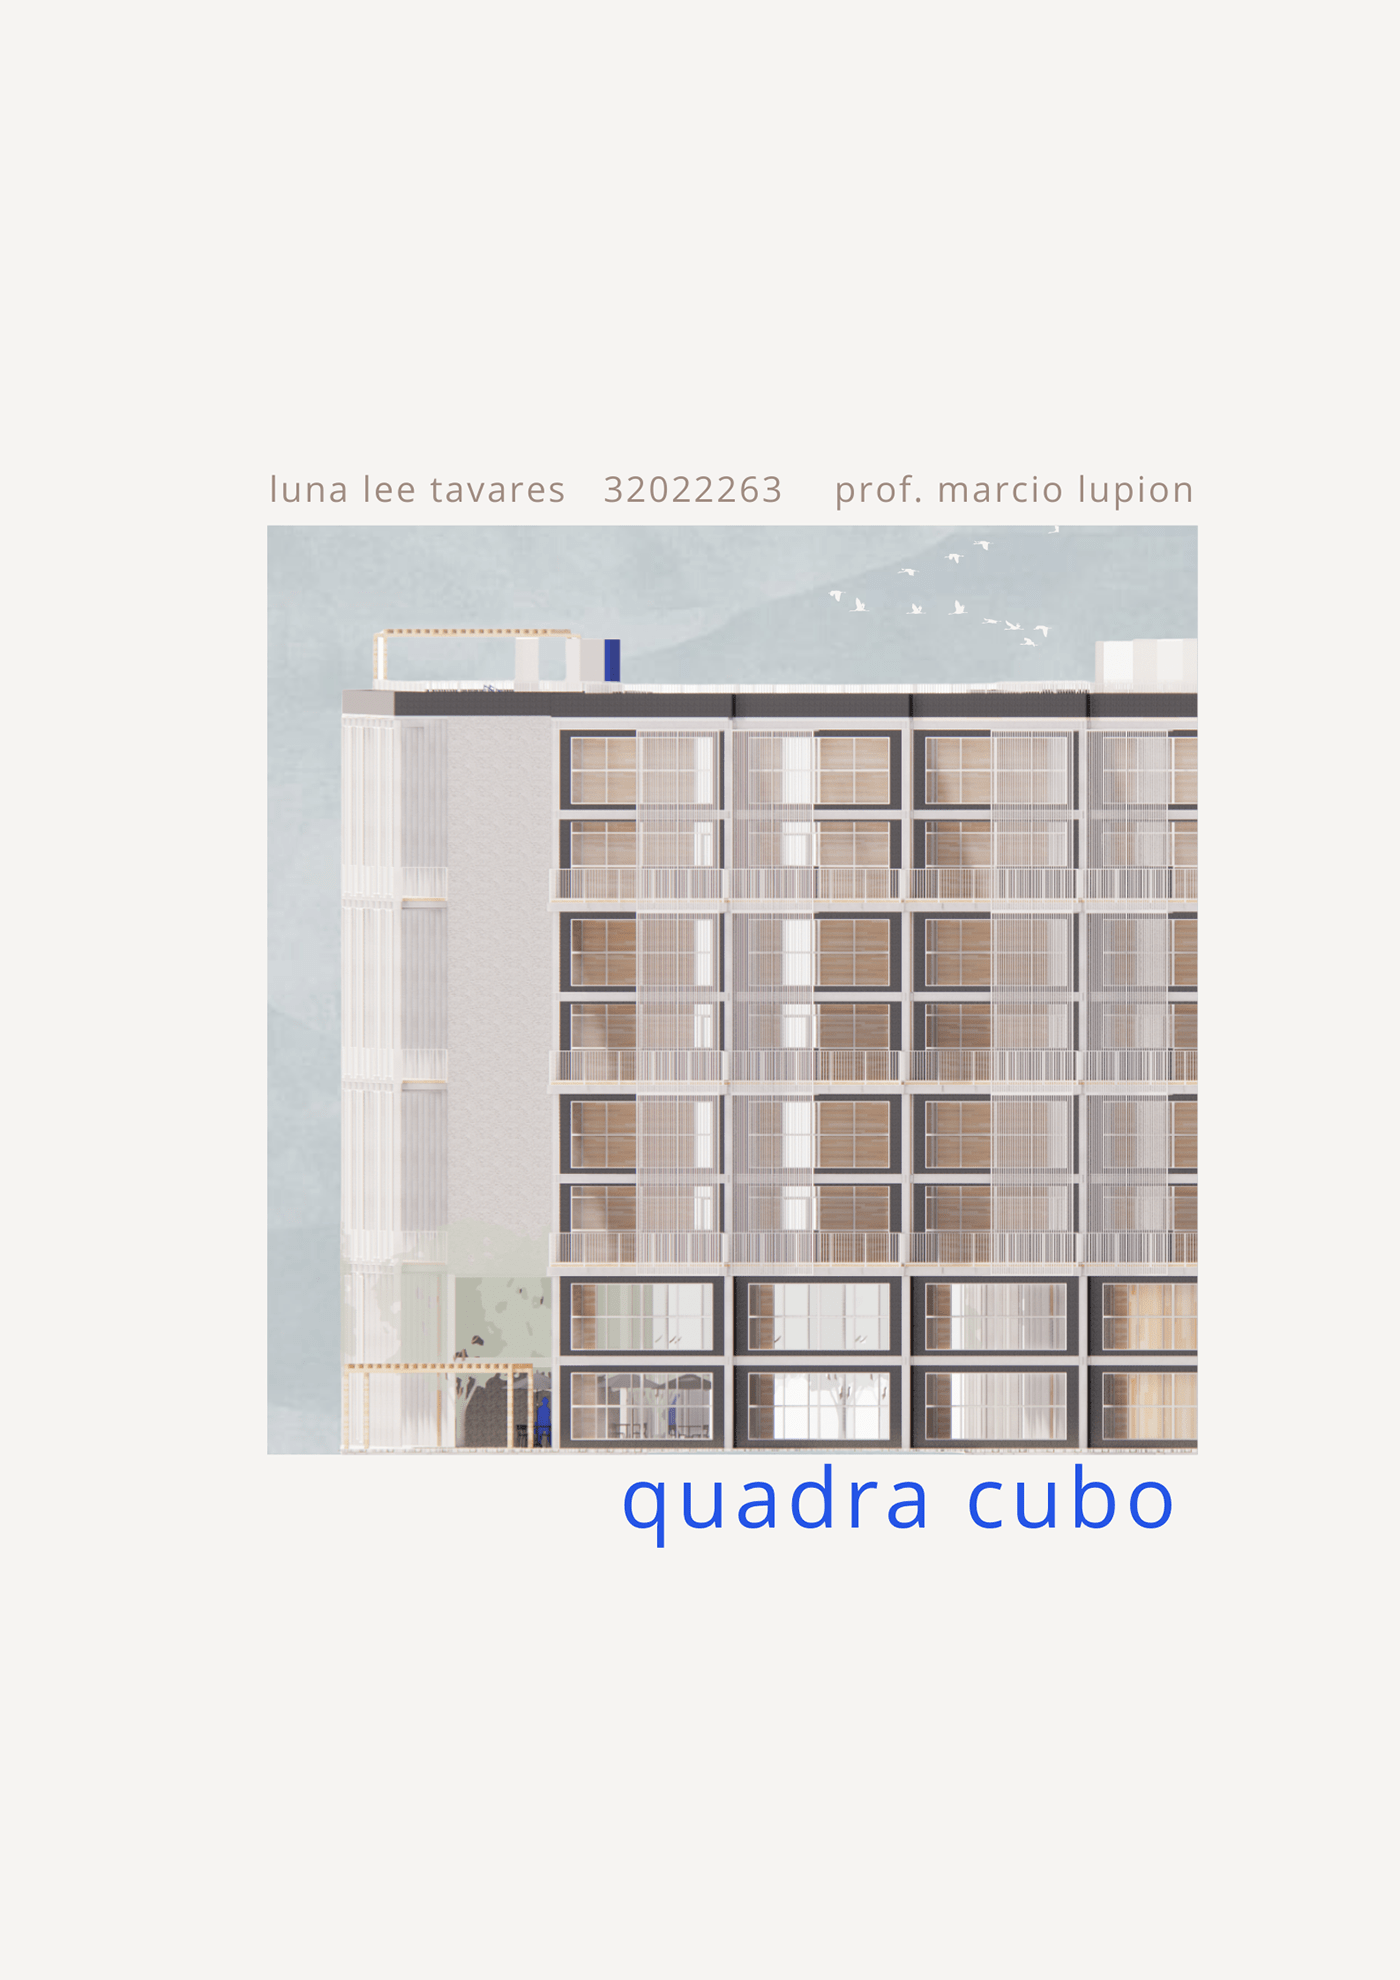 3D architecture AutoCAD casa cubo cubic house enscape Projeto V Fau Mackenzie quadra cubo Render SketchUP